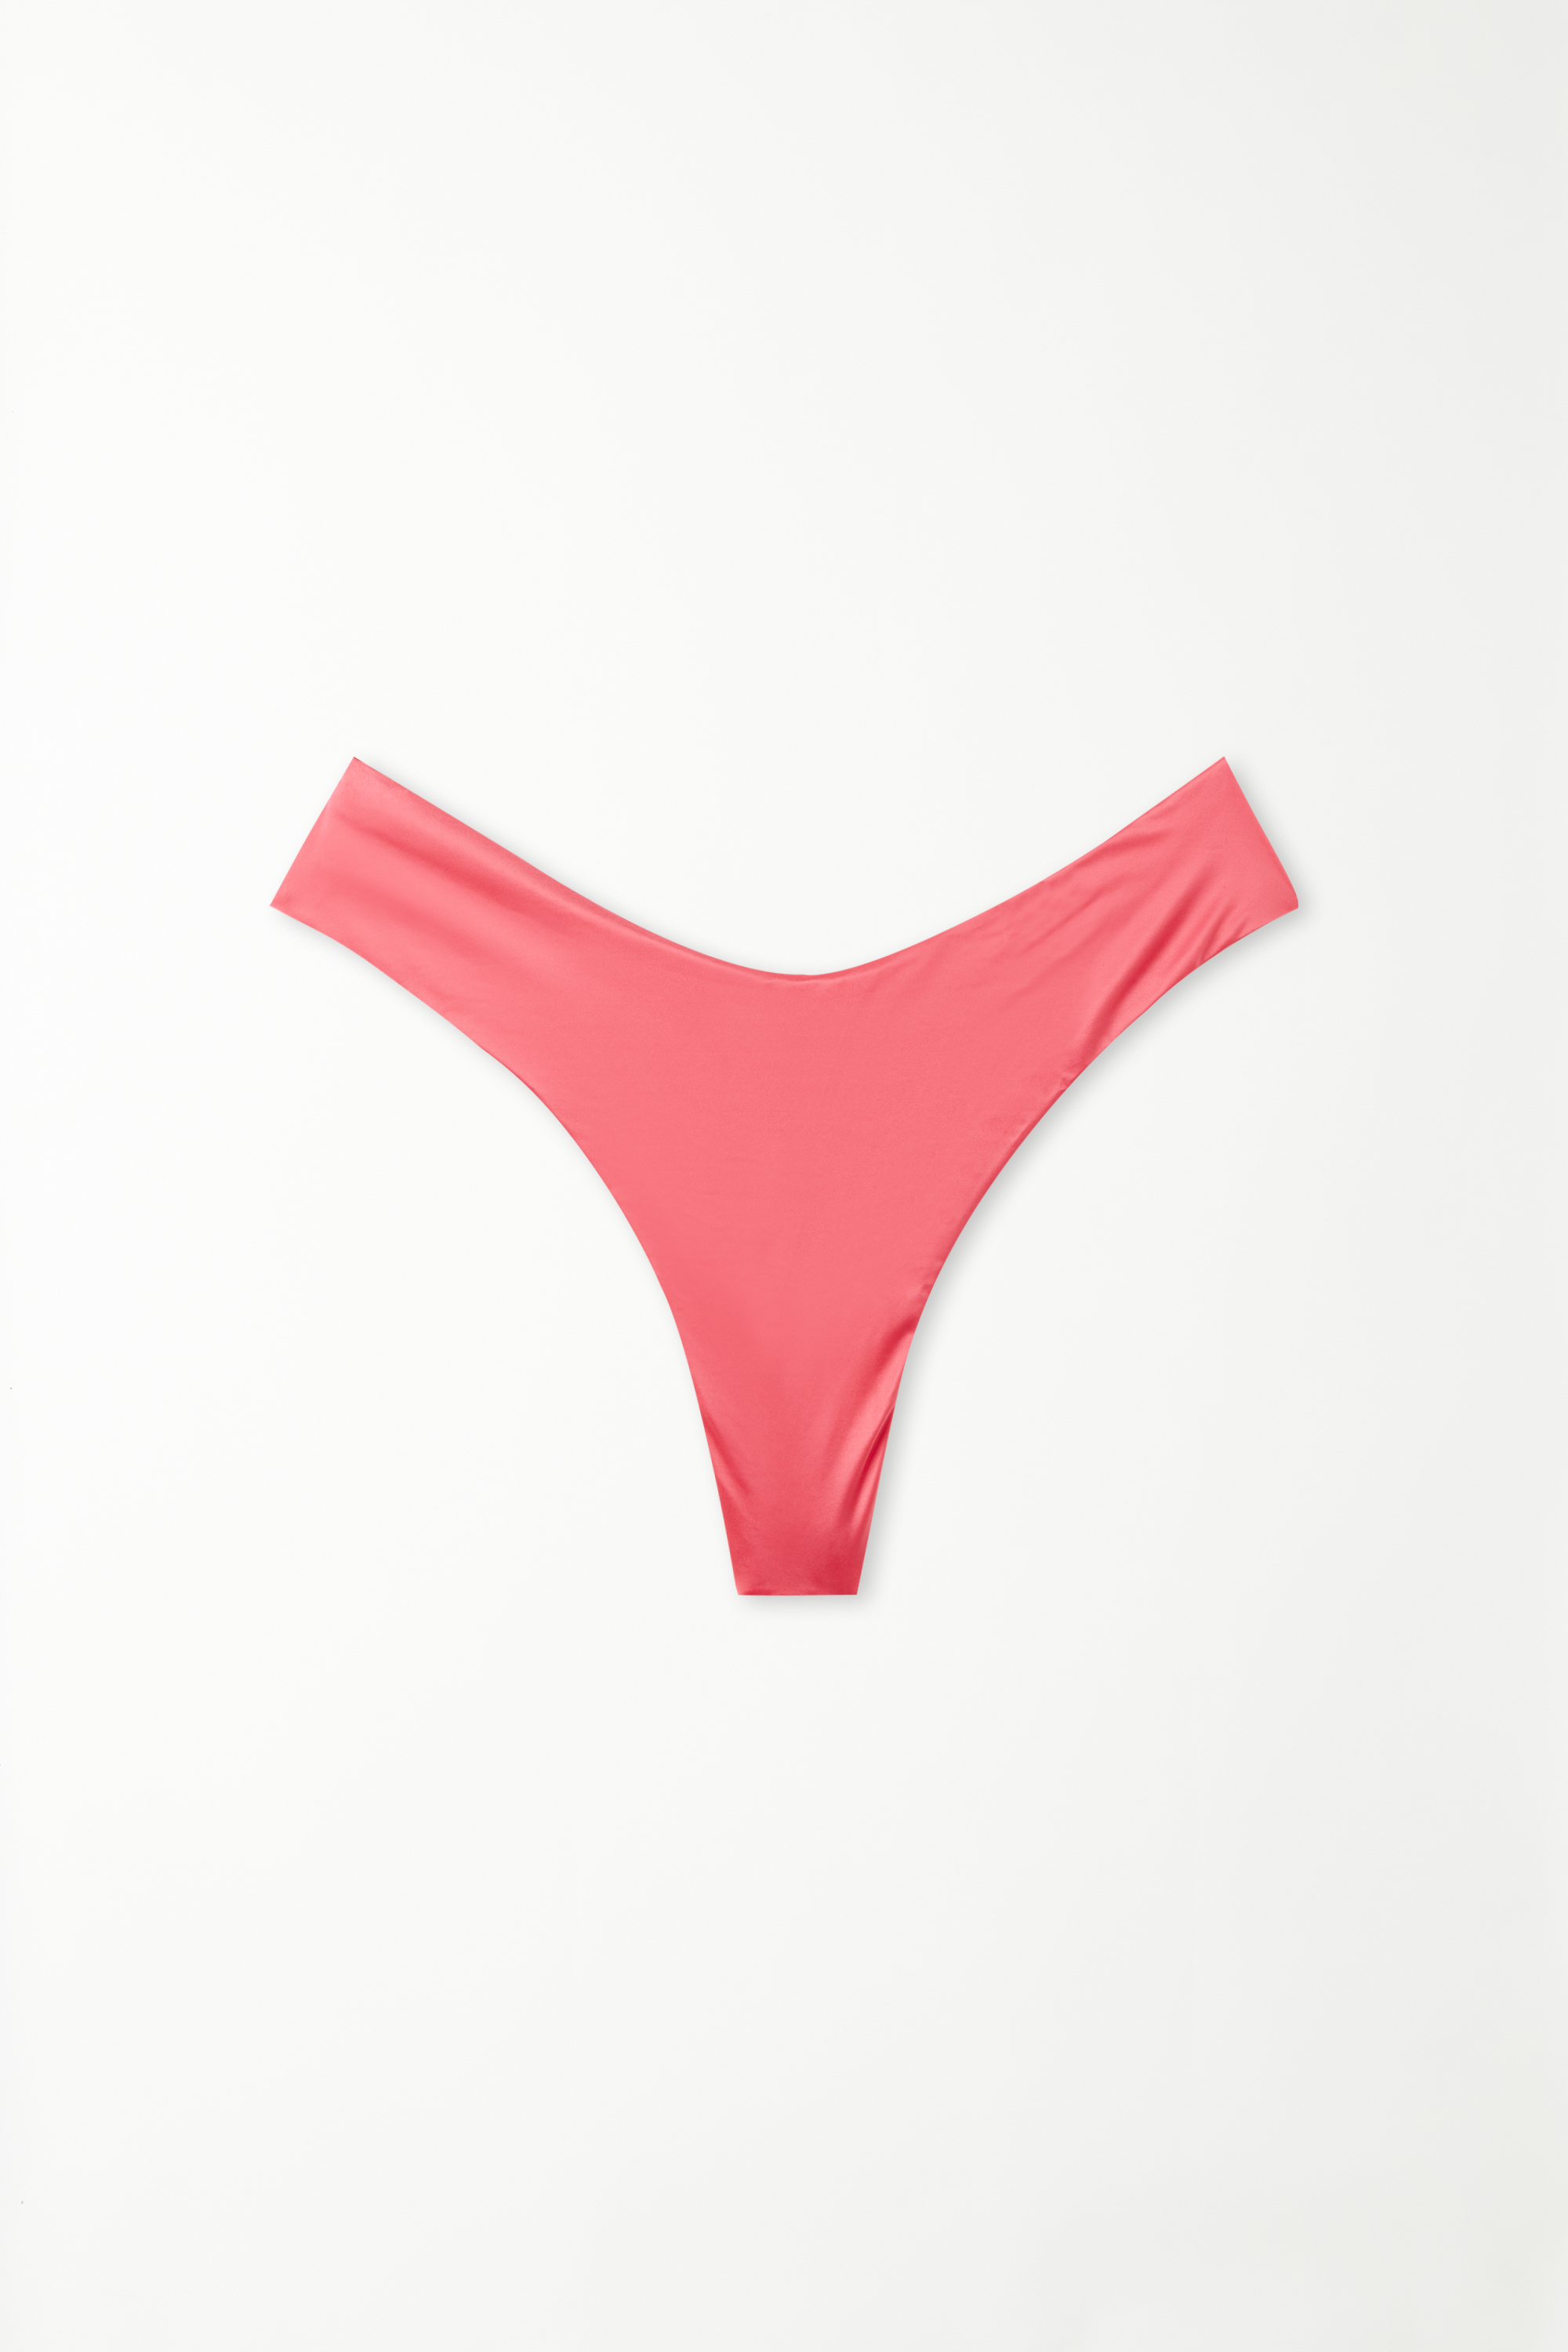 Shiny Summer Pink Rounded High-Cut Brazilian Bikini